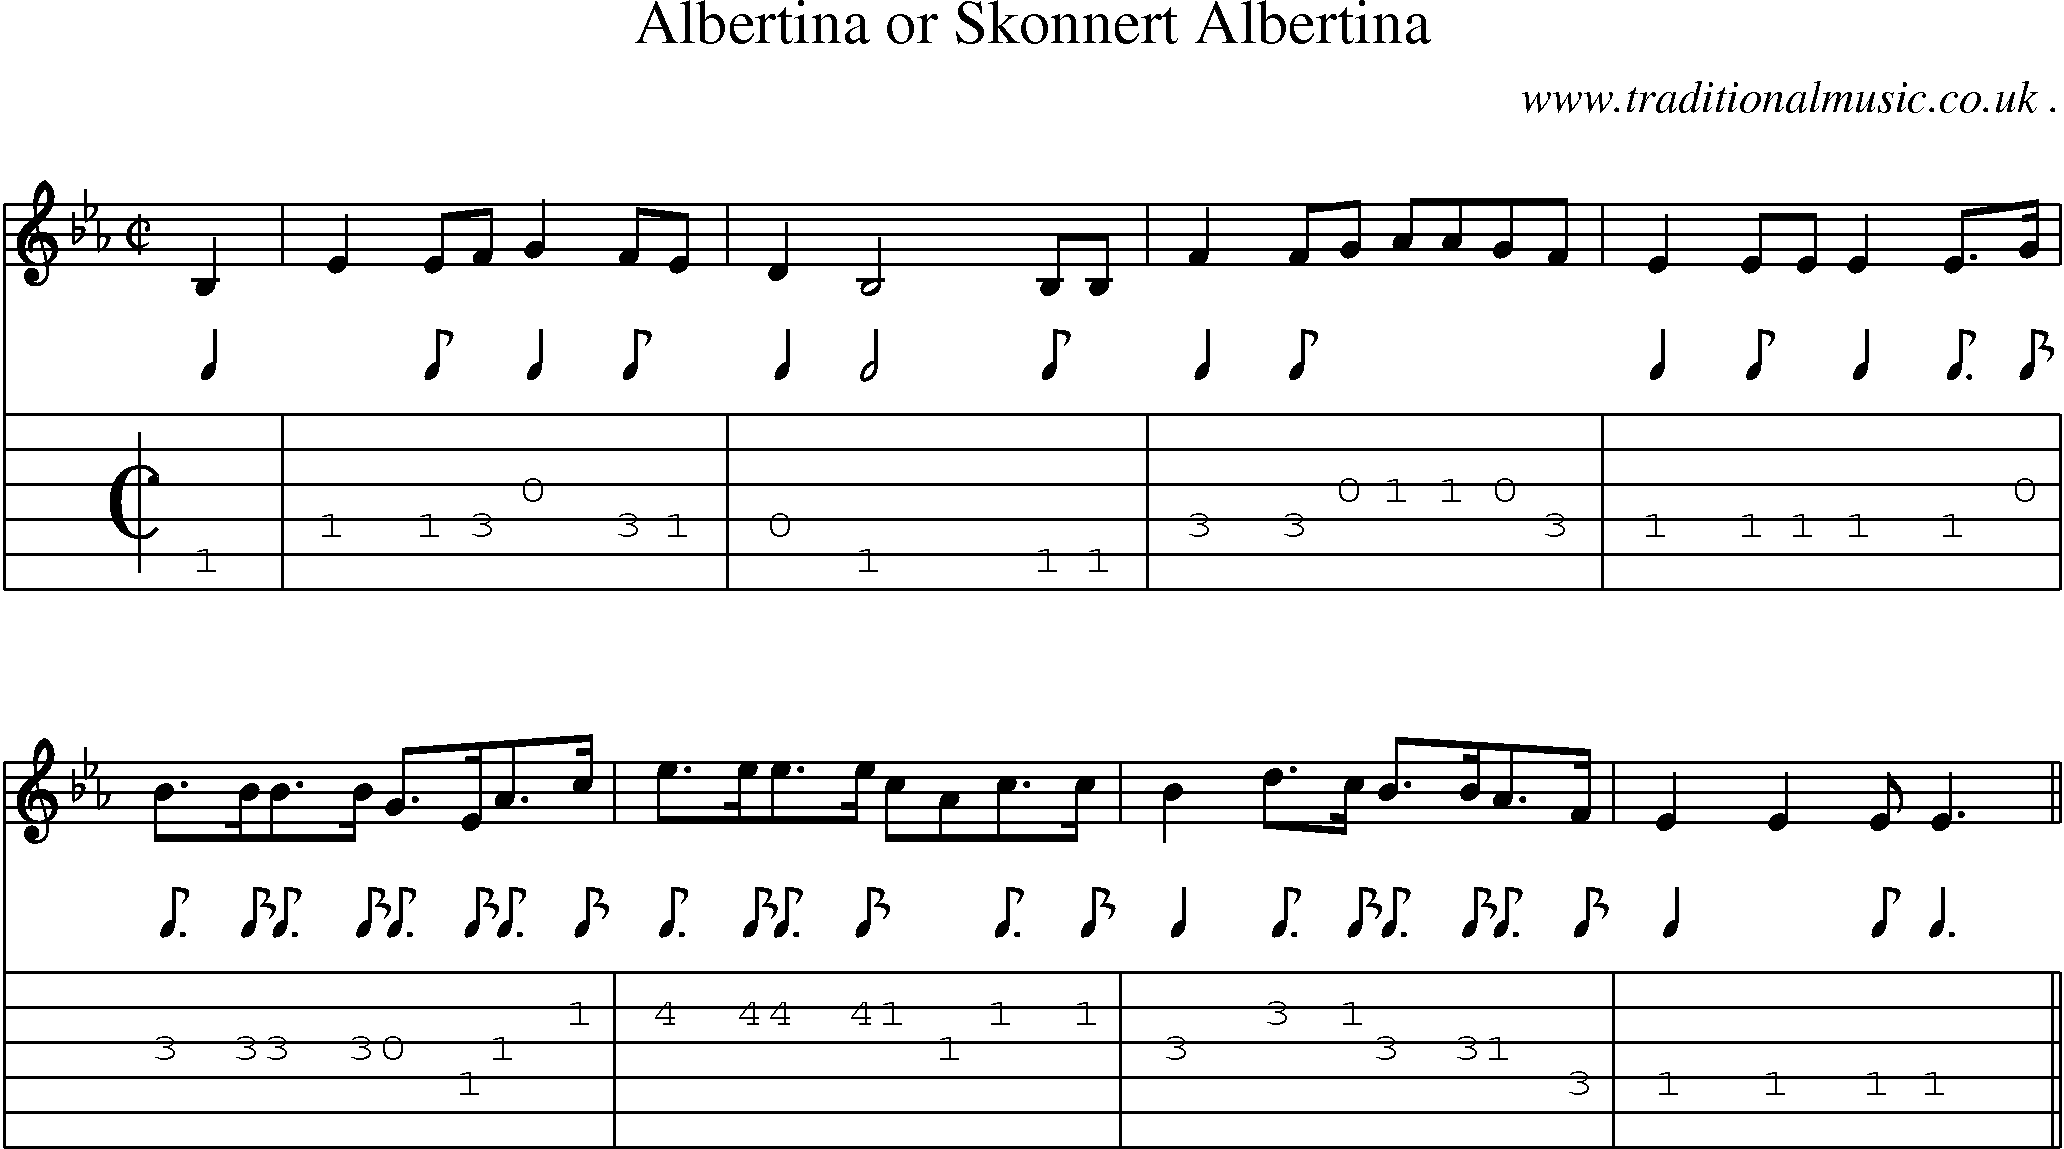 Sheet-Music and Guitar Tabs for Albertina Or Skonnert Albertina